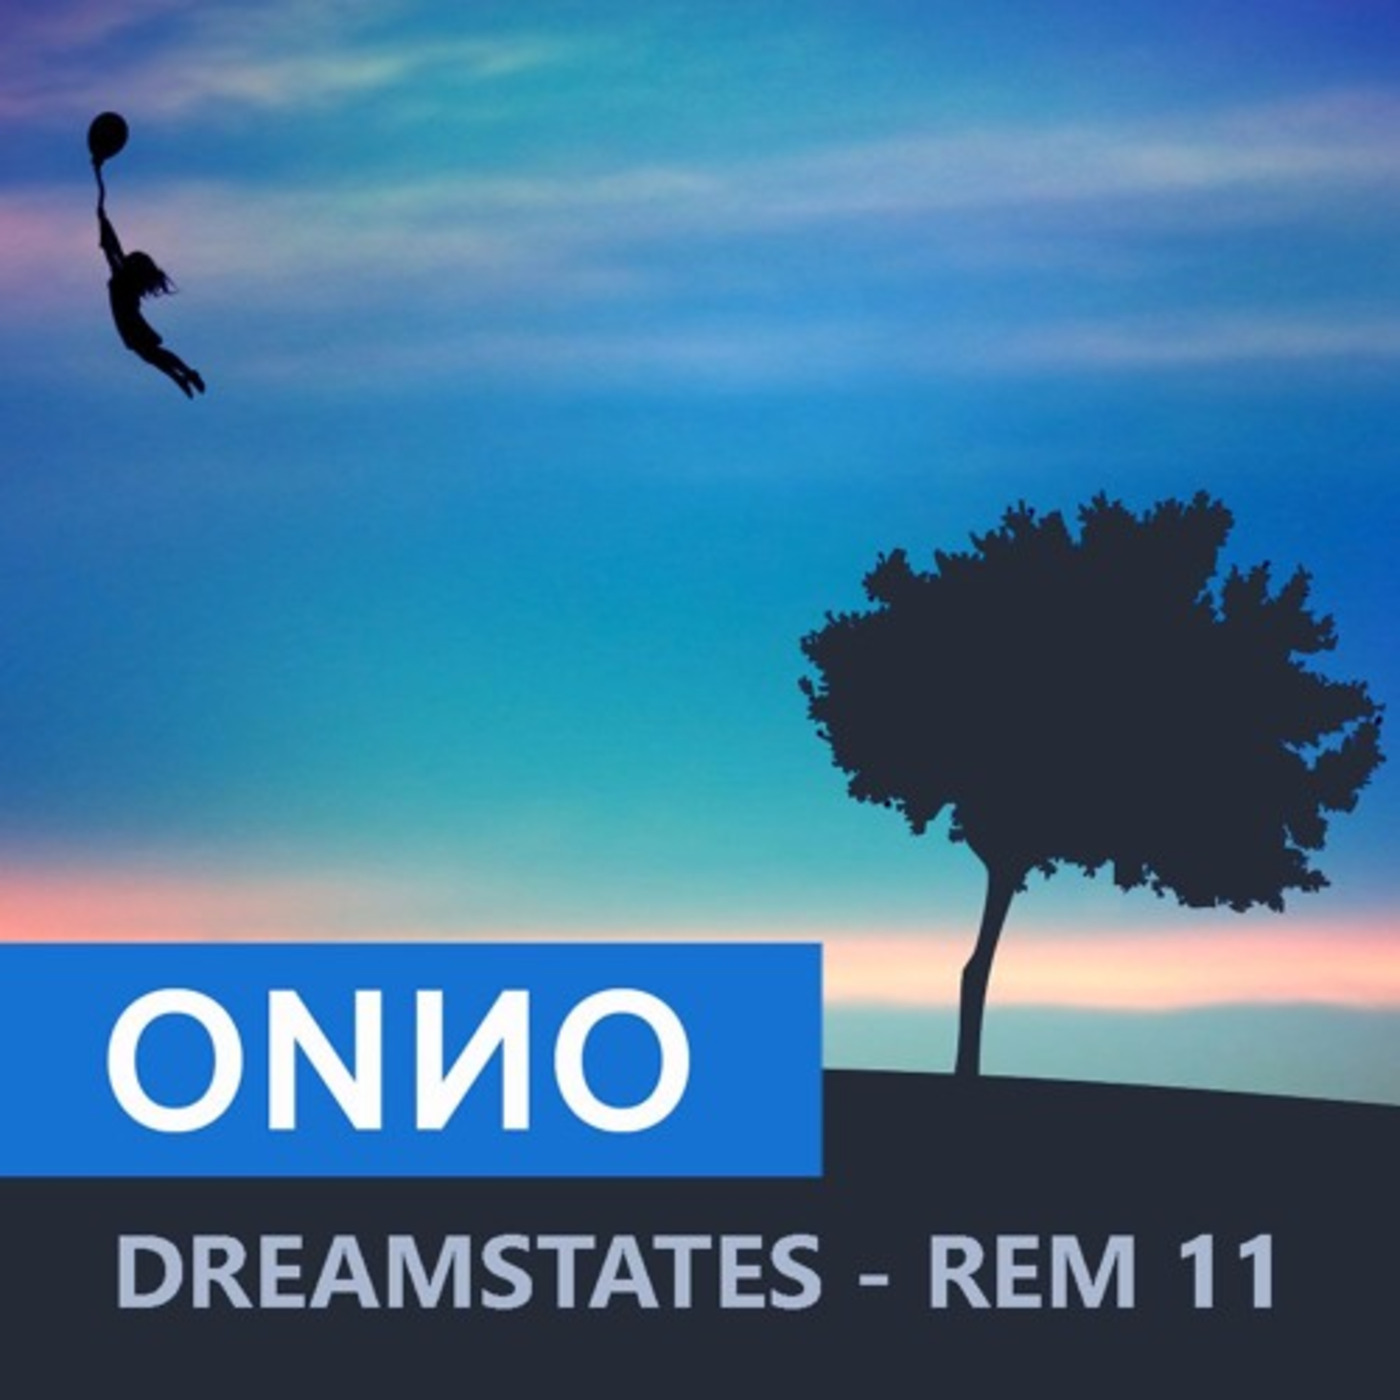 Onno Boomstra - DREAMSTATES - REM 11